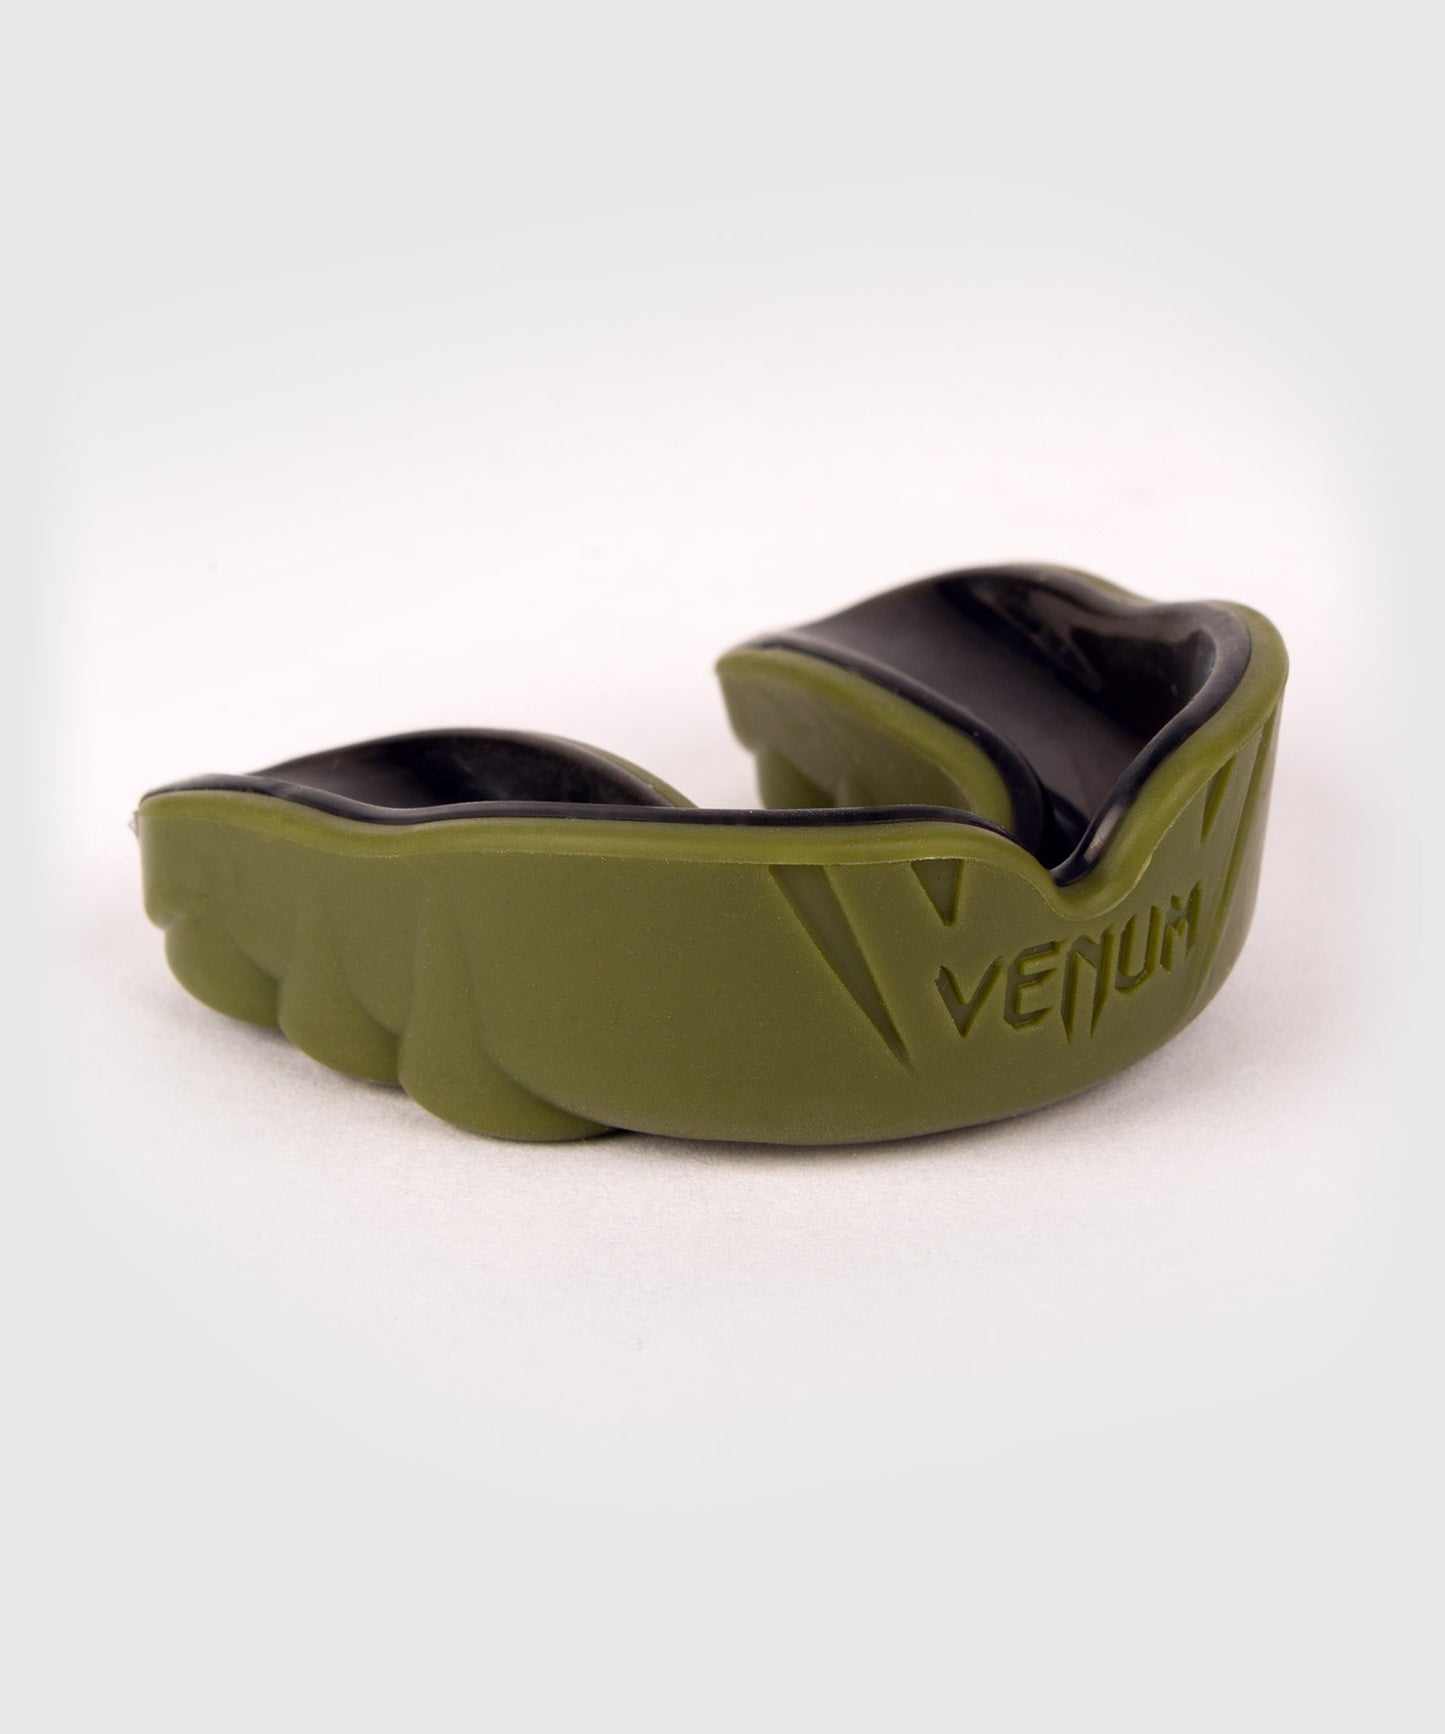 Venum Challenger Mouthguard - Khaki/Black